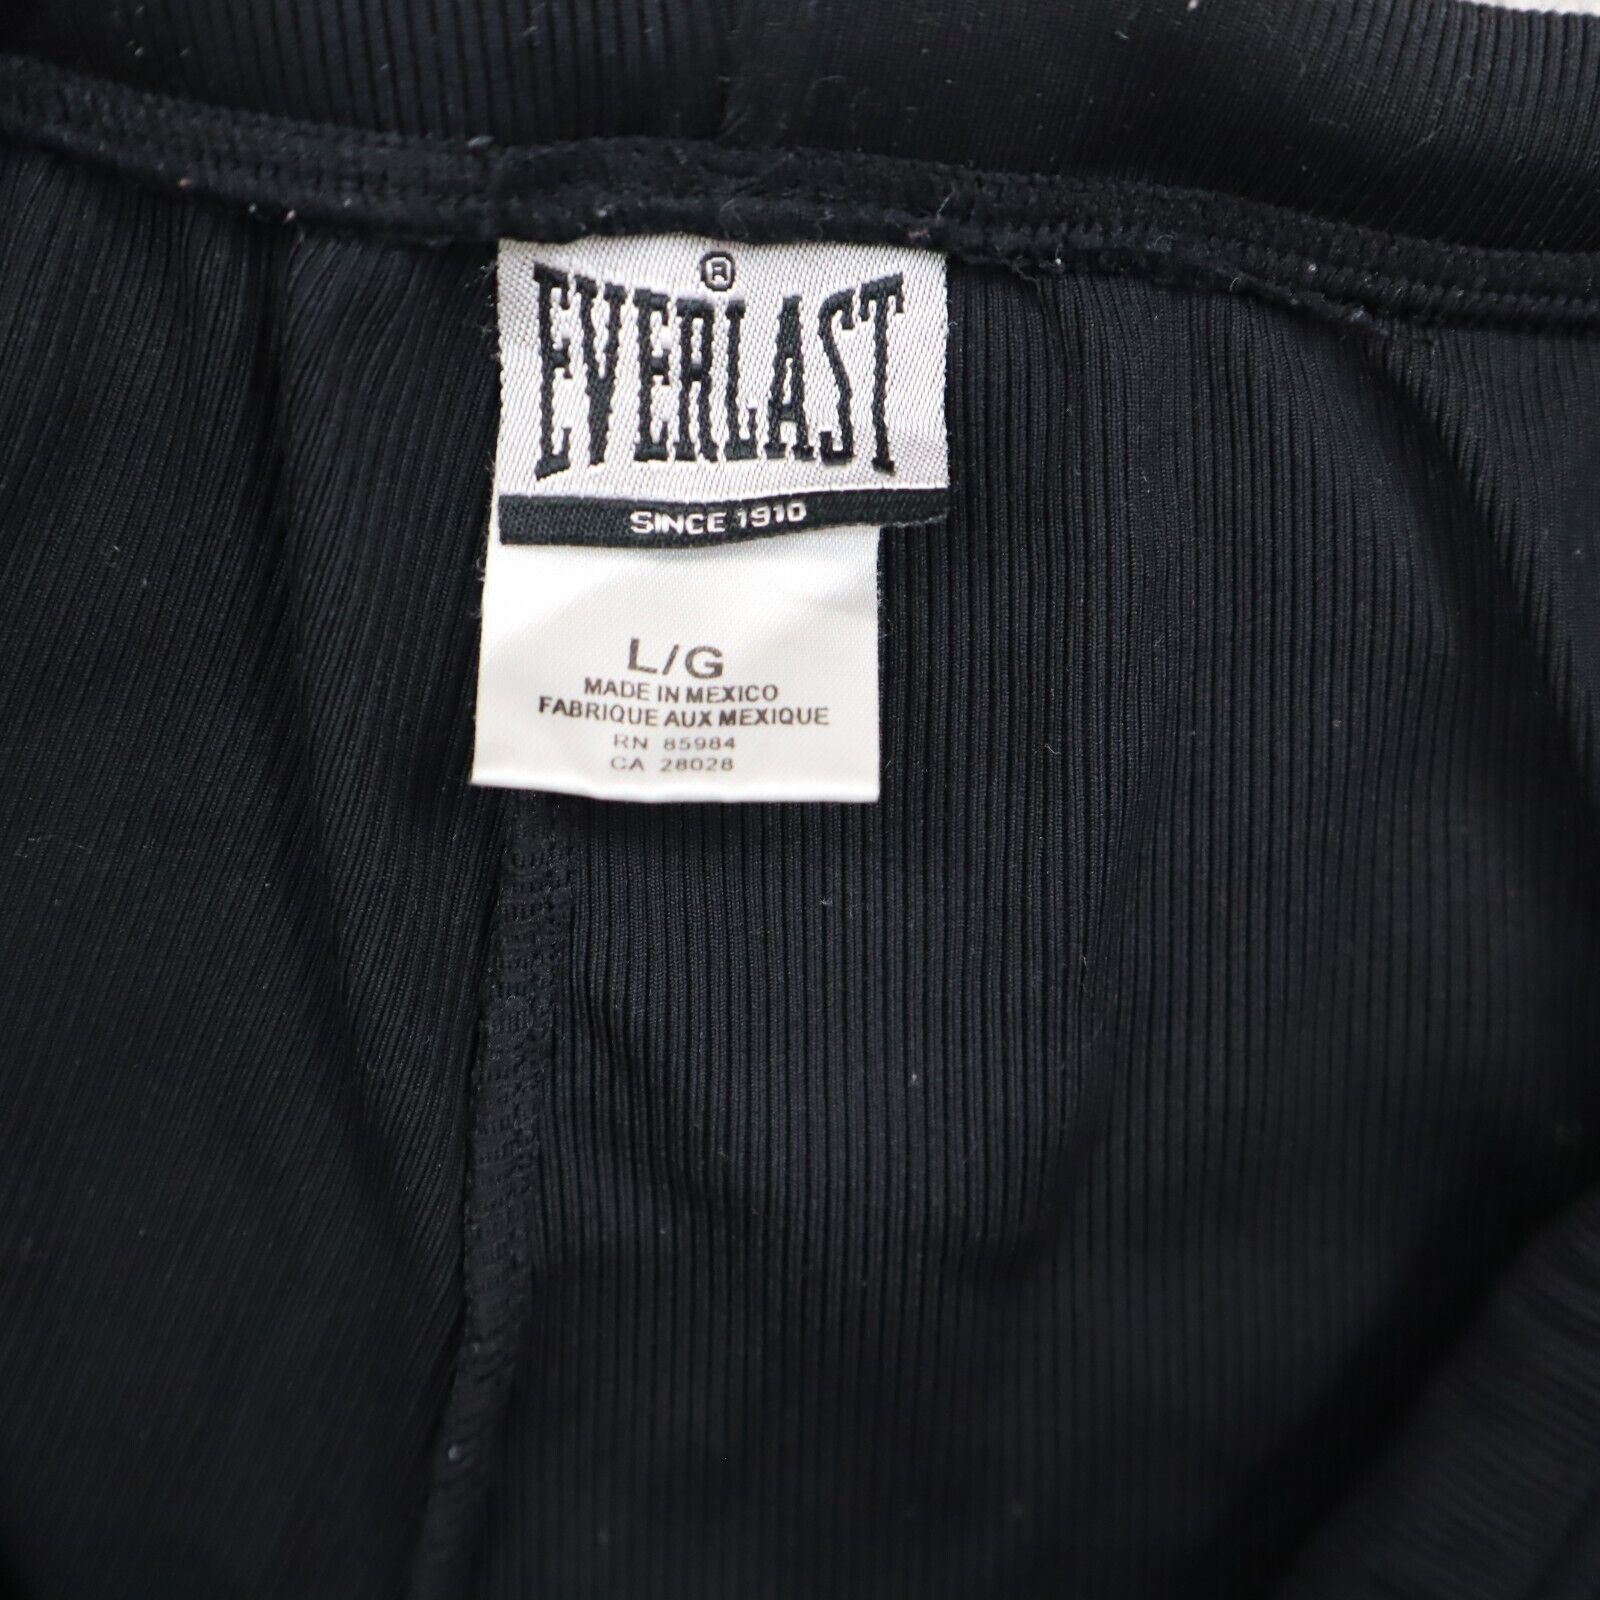 EVERLAST Woman's White/Black Stretch cotton leggings with Everlast